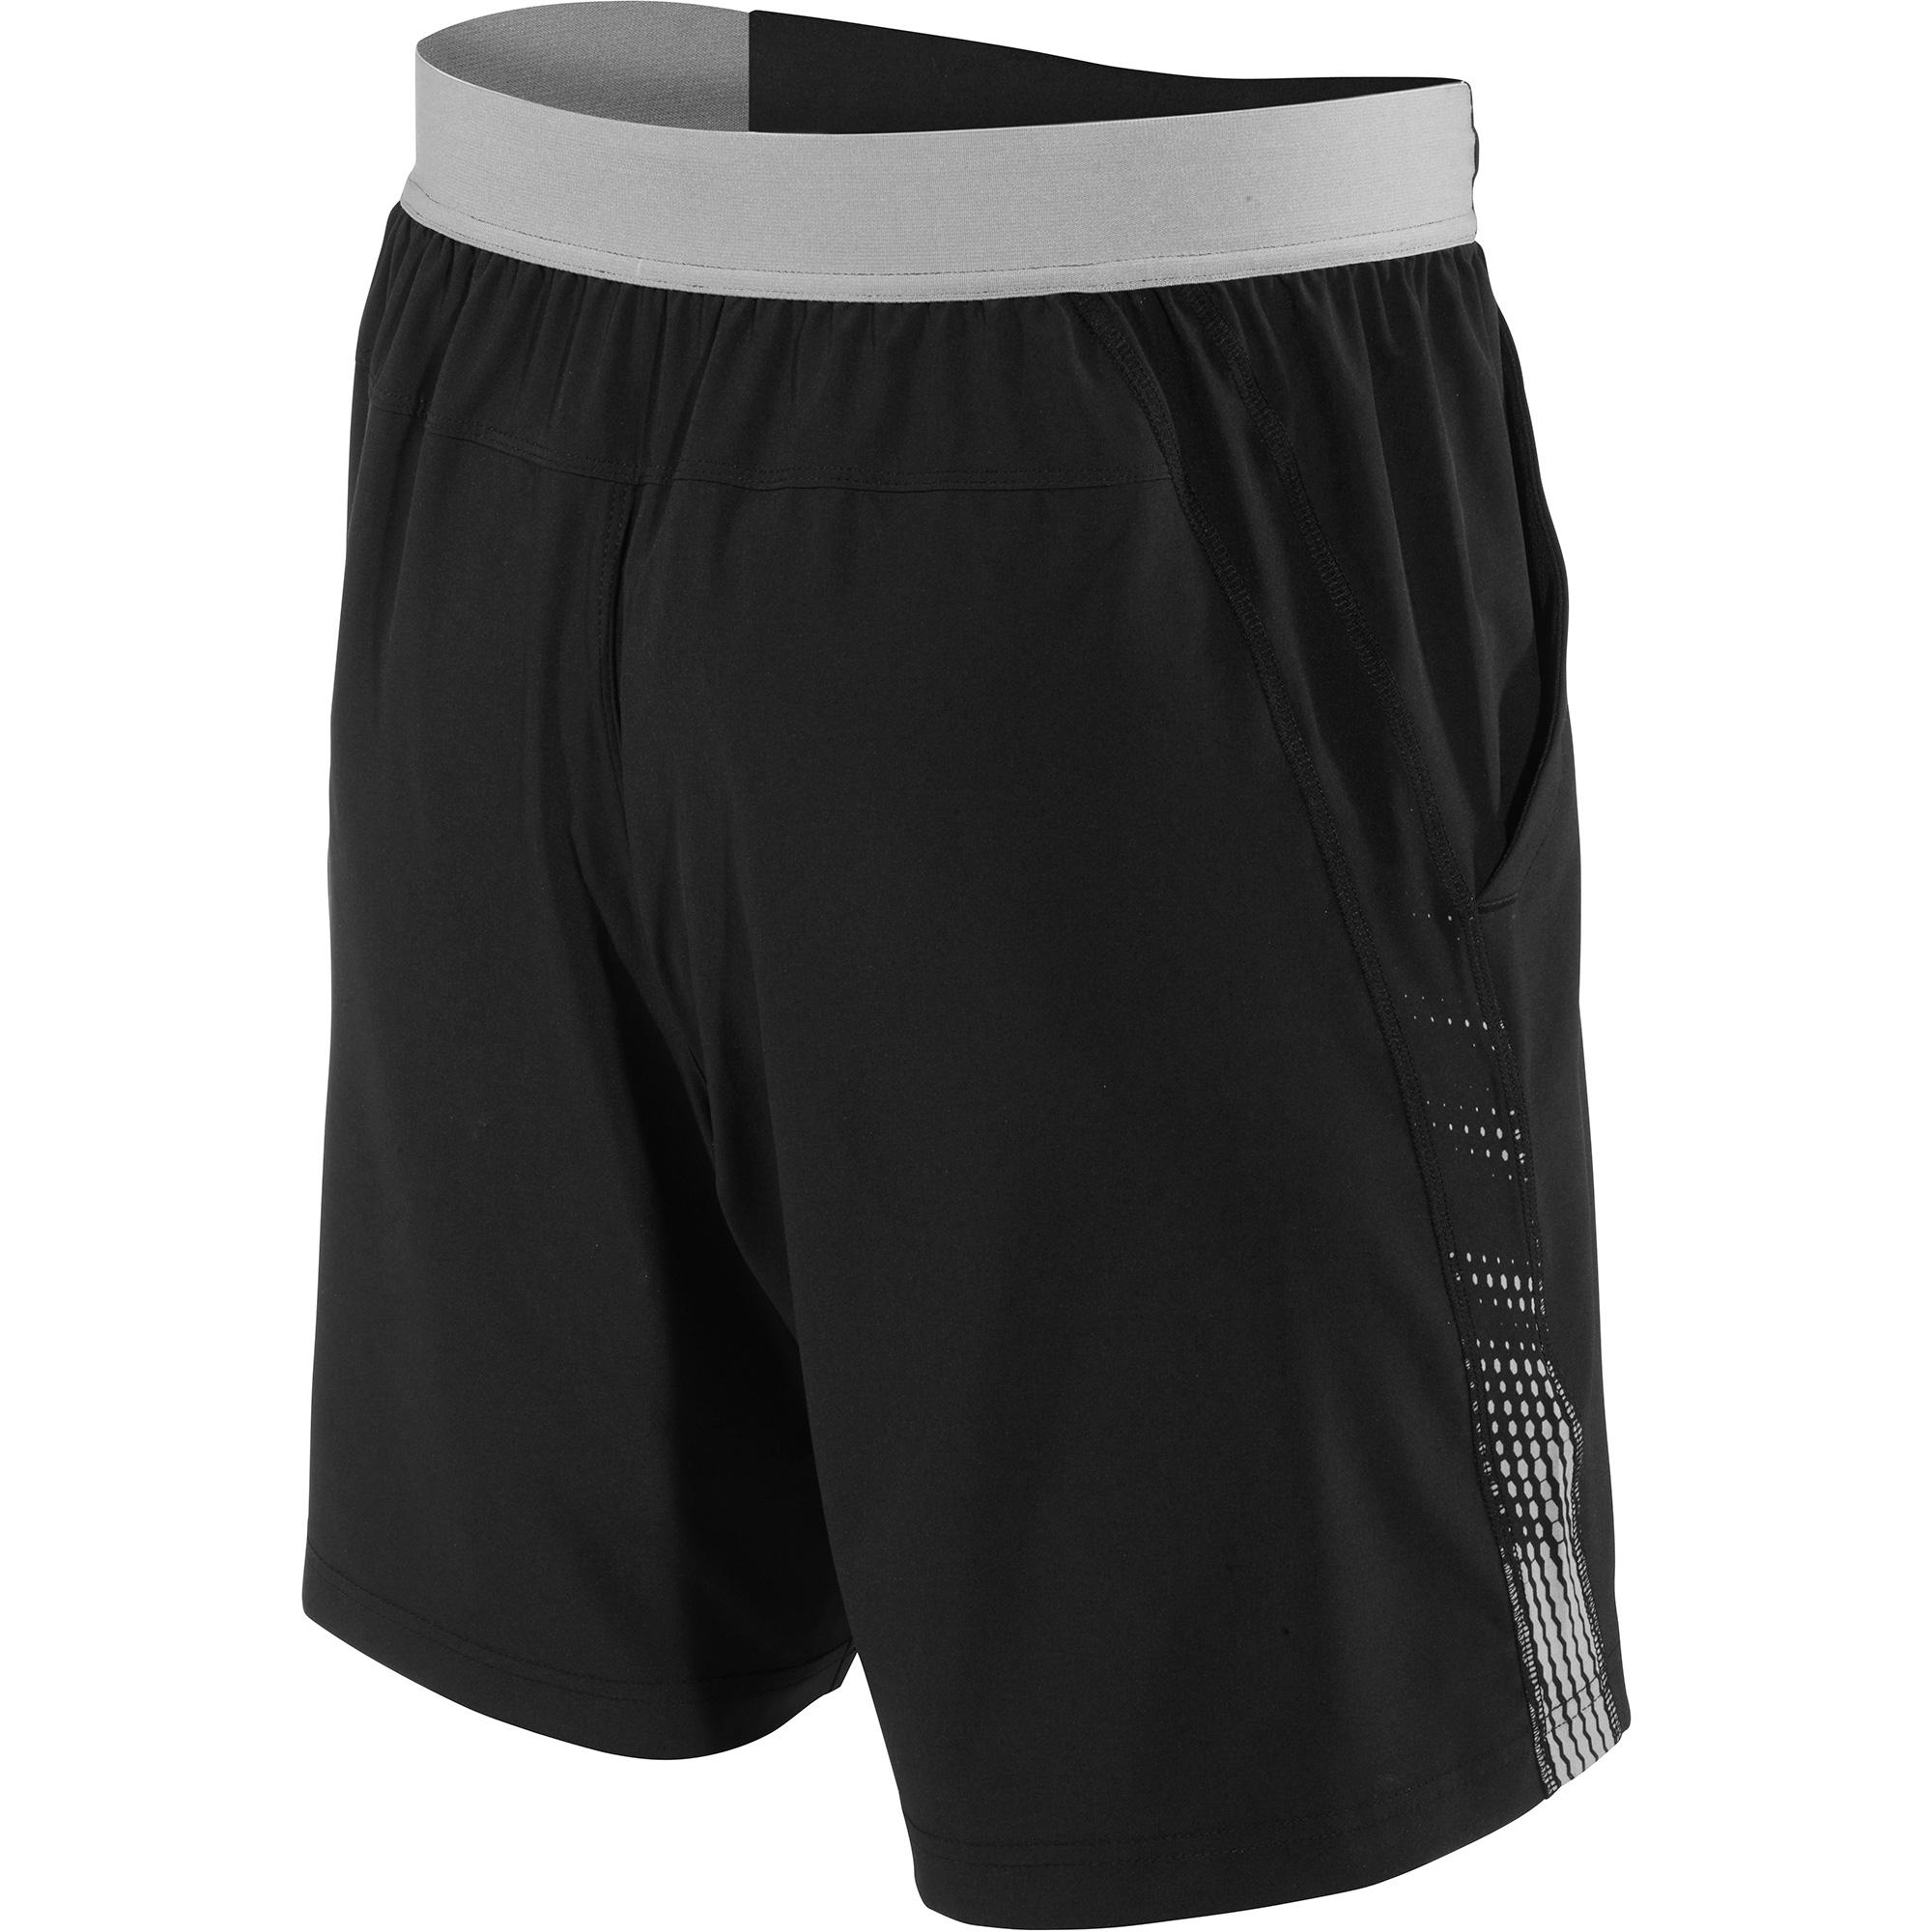 Babolat Mens Performance Shorts - Black/Silver - Tennisnuts.com